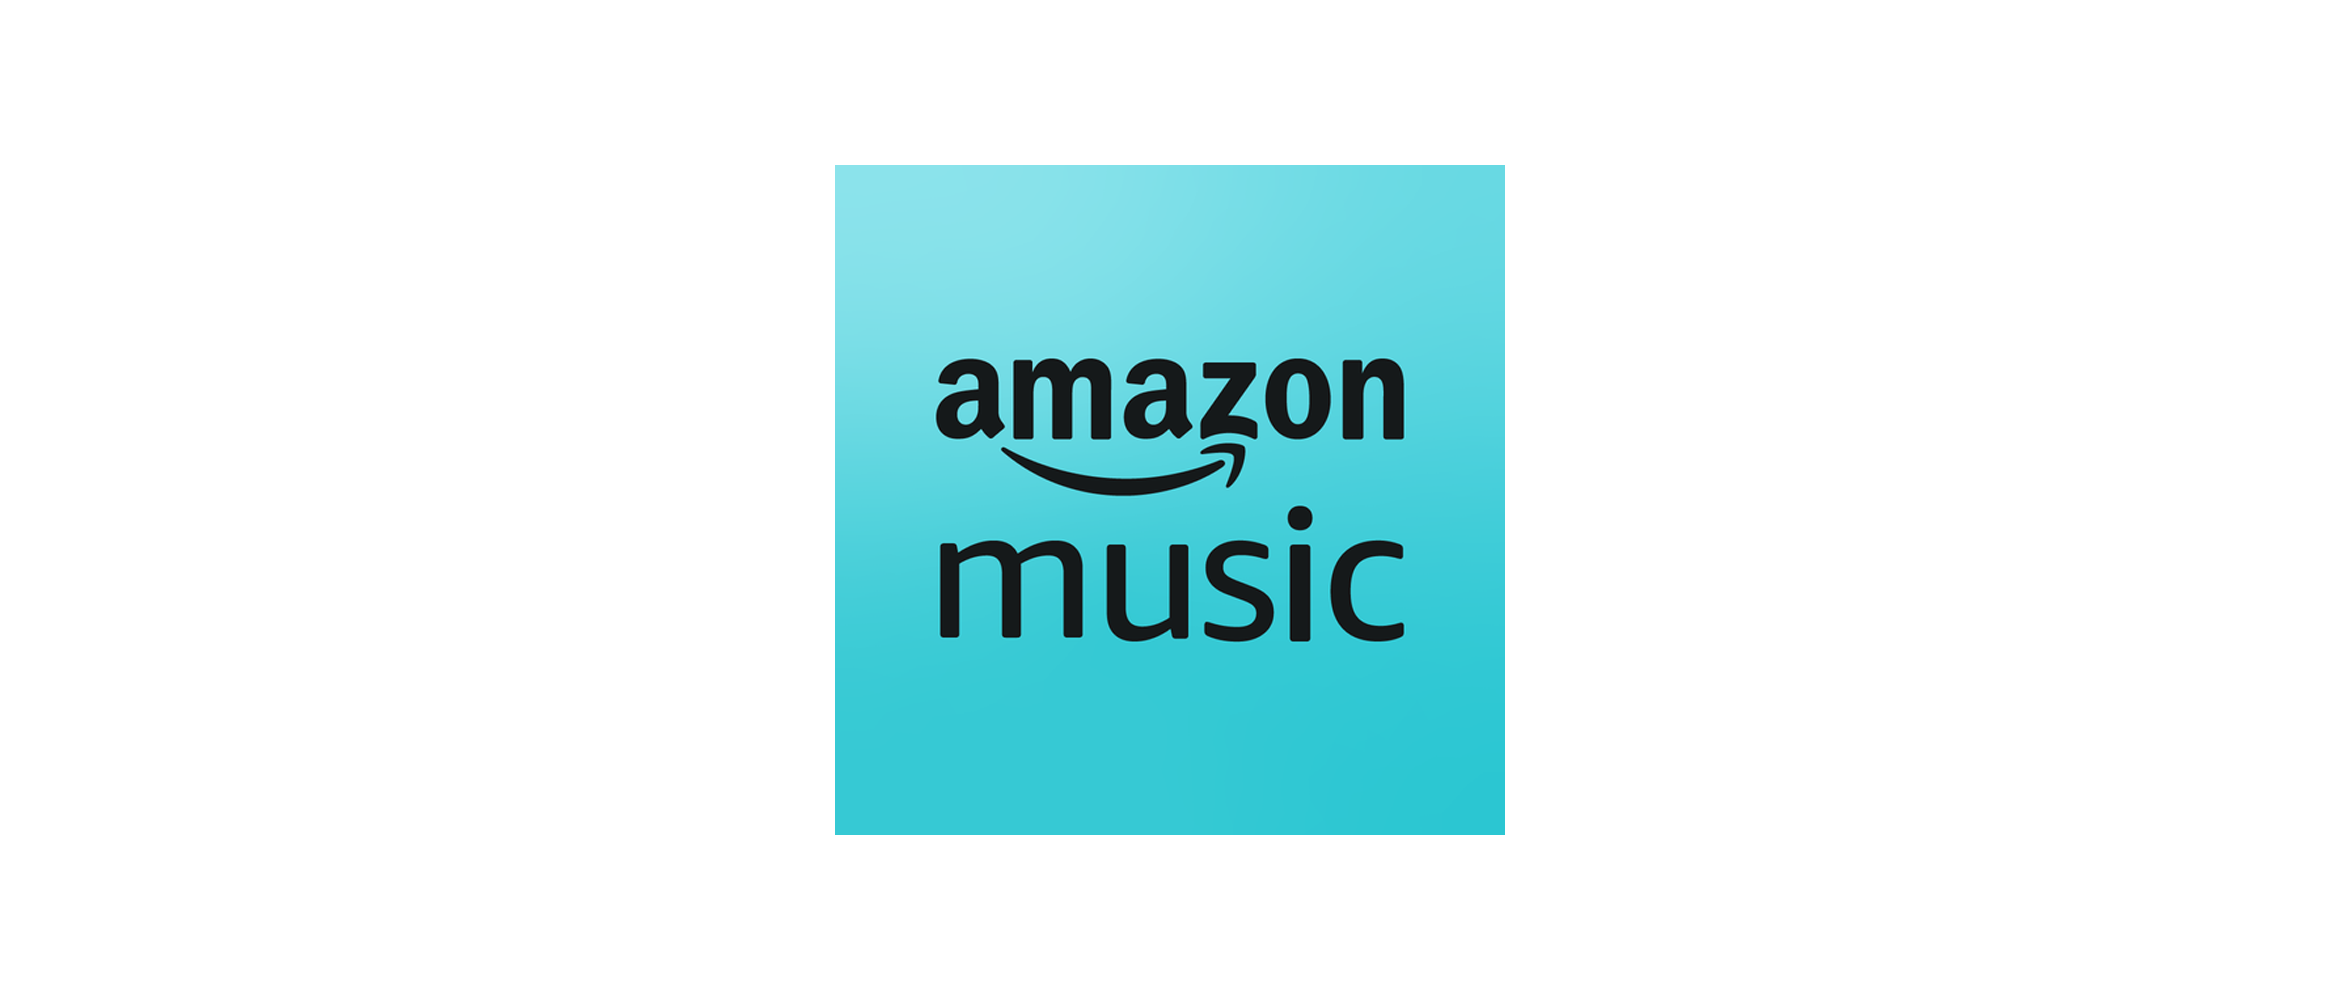 Amazon music 